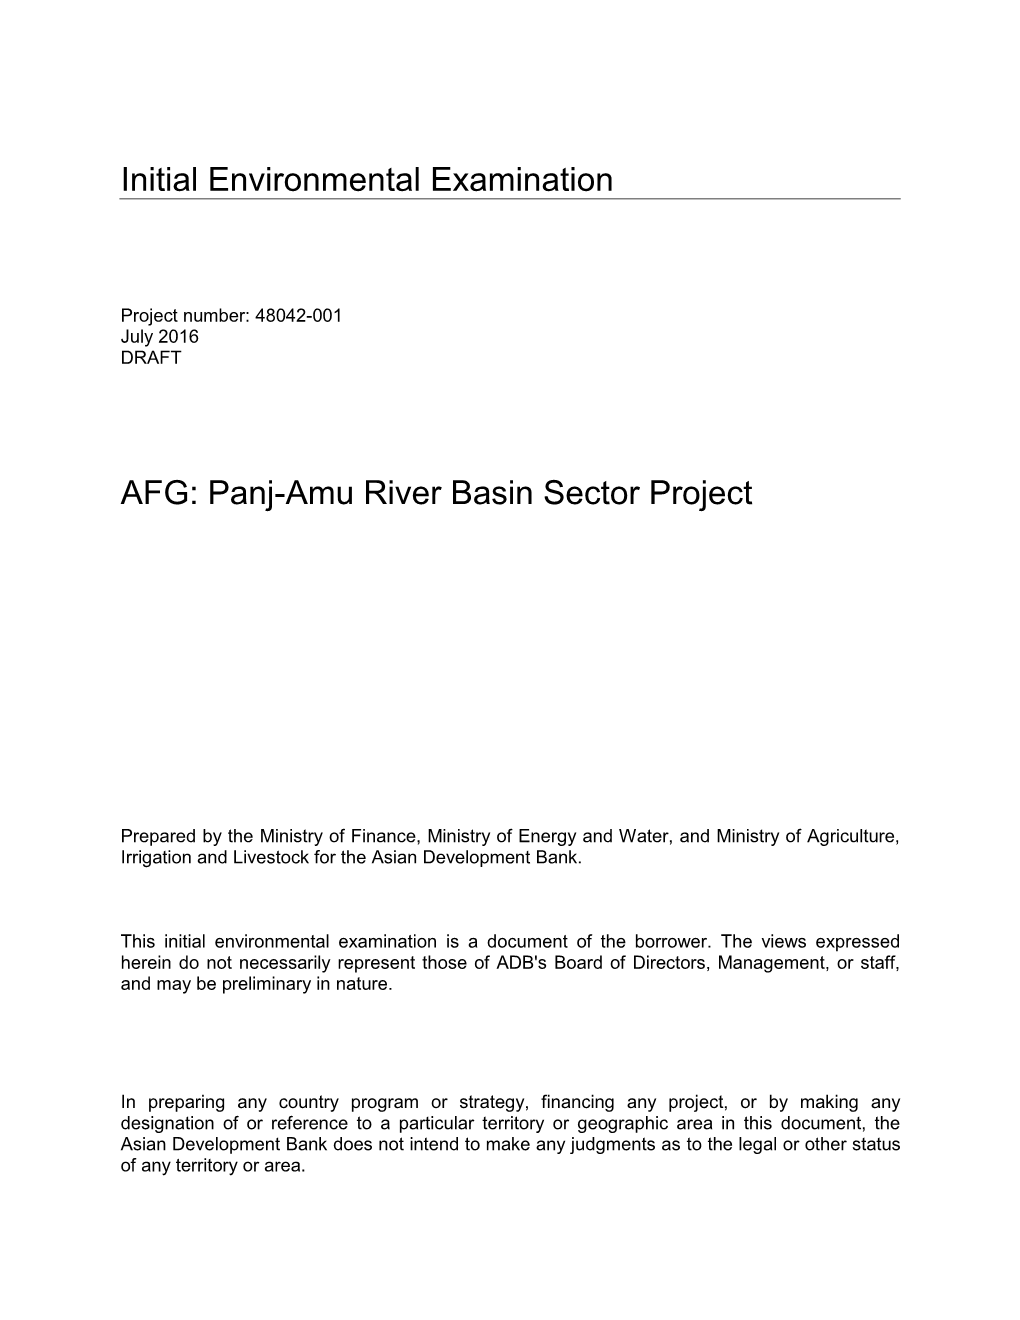 Panj-Amu River Basin Sector Project